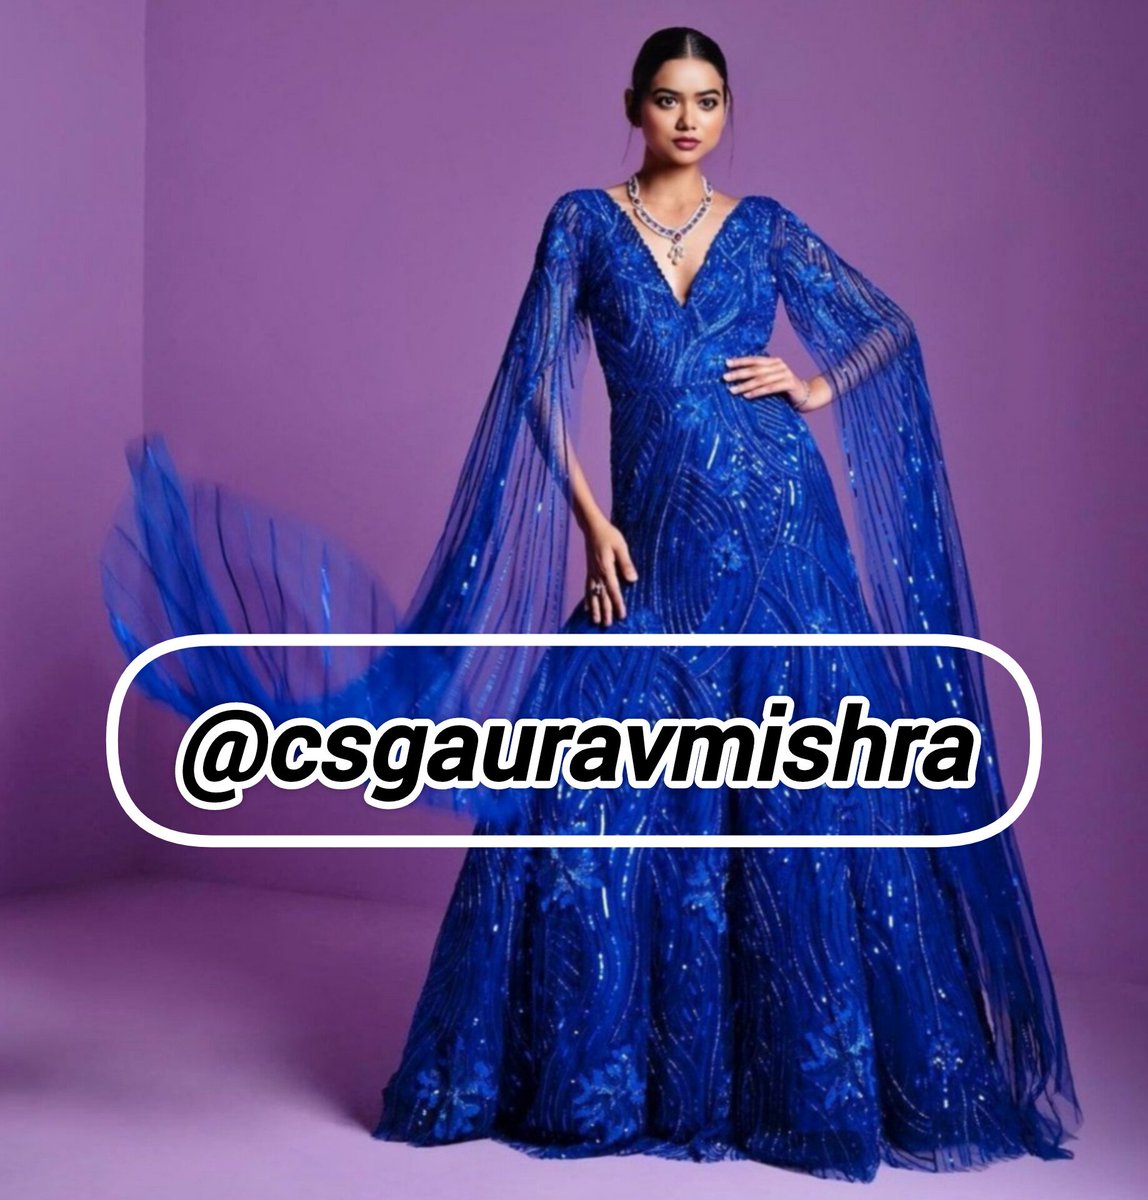 🚨 #ManishaRani's Gorgeous Look in Recent Photoshoot! 😍💙 Like & Follow- @CSGauravMishra Comment- Your views? #ManishaSquad #BiggBoss